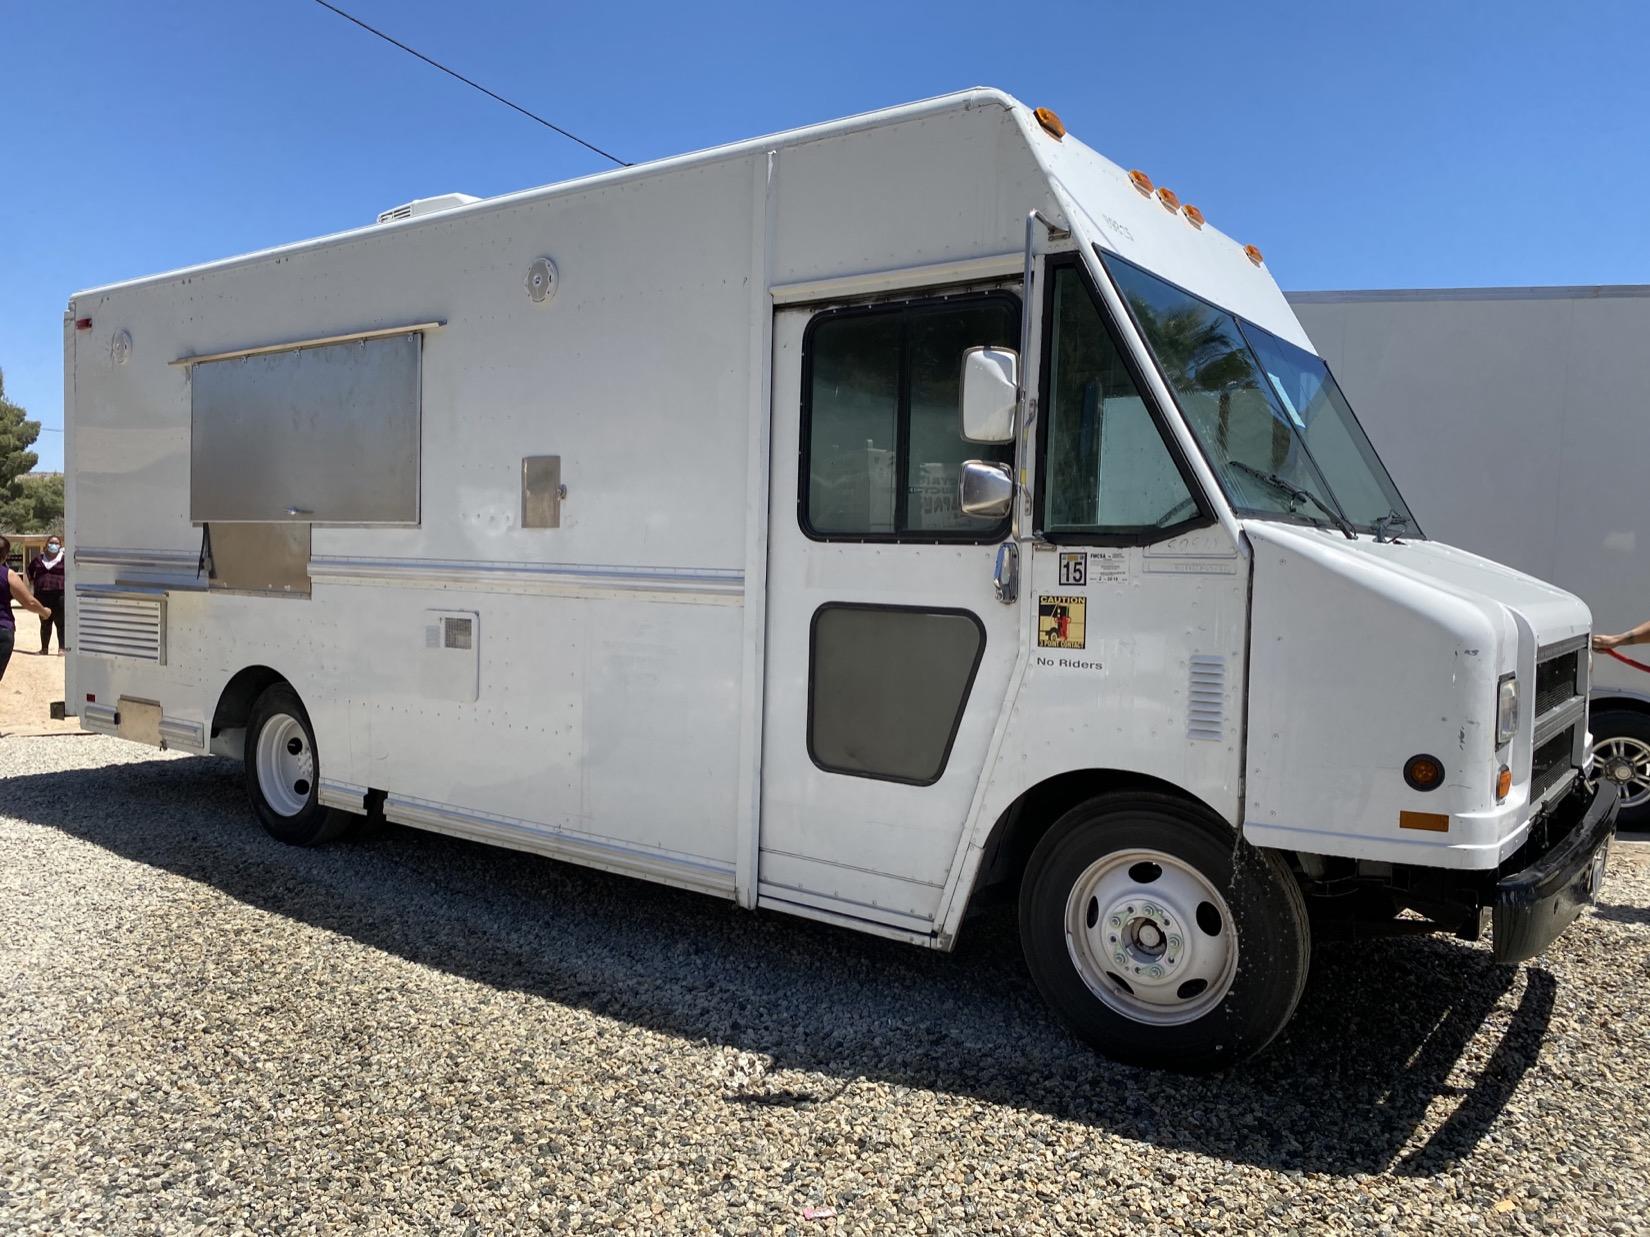 https://fireflyfabrication.com/wp-content/uploads/2022/07/Exterior-1-Rosalva-Taco-Truck-Taco-Trailer-Food-Truck-Food-Trailer-Catering-Truck-Lonchera-Camion-de-Comida-Mobile-Food-Business.jpeg